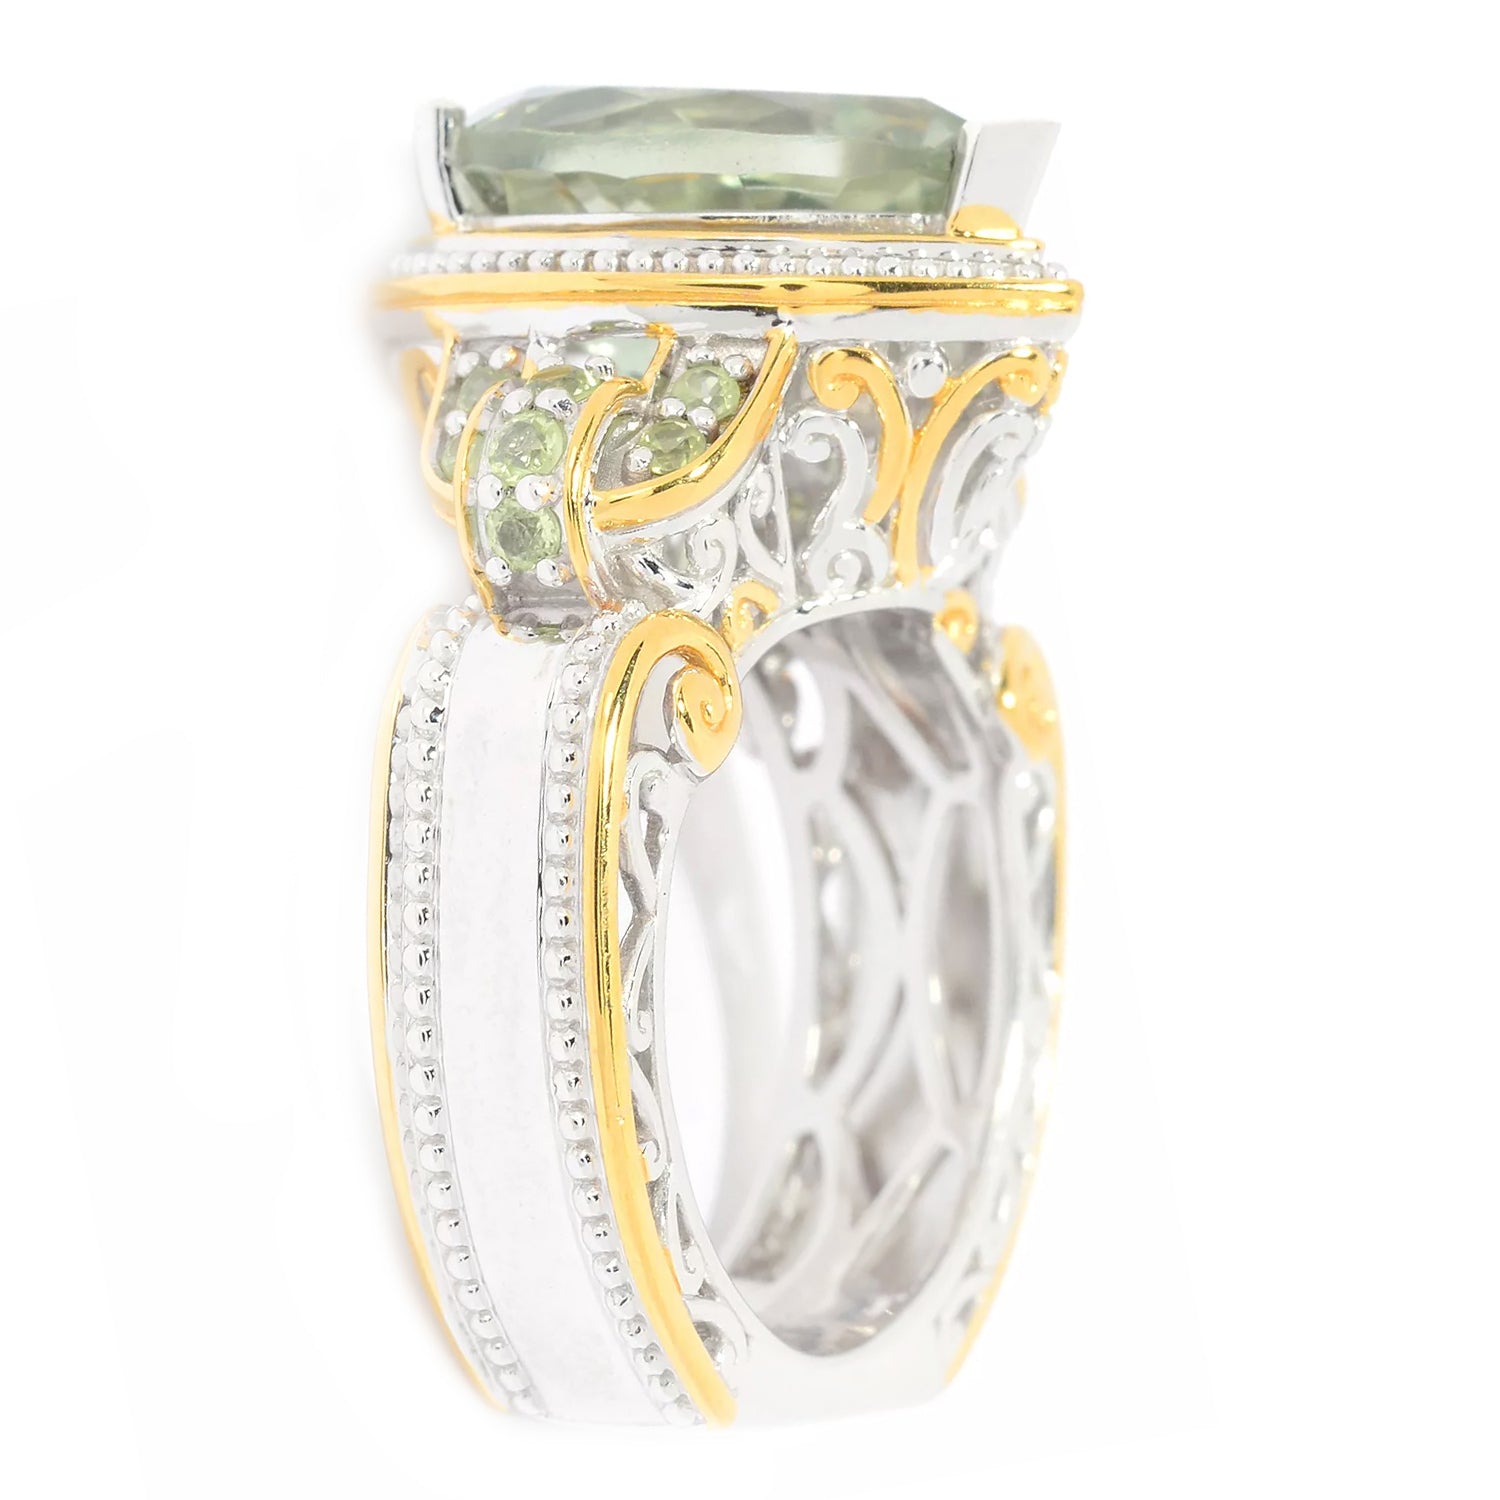 Gems en Vogue 5.04ctw Pearshaped Prasiolite & Peridot Ring